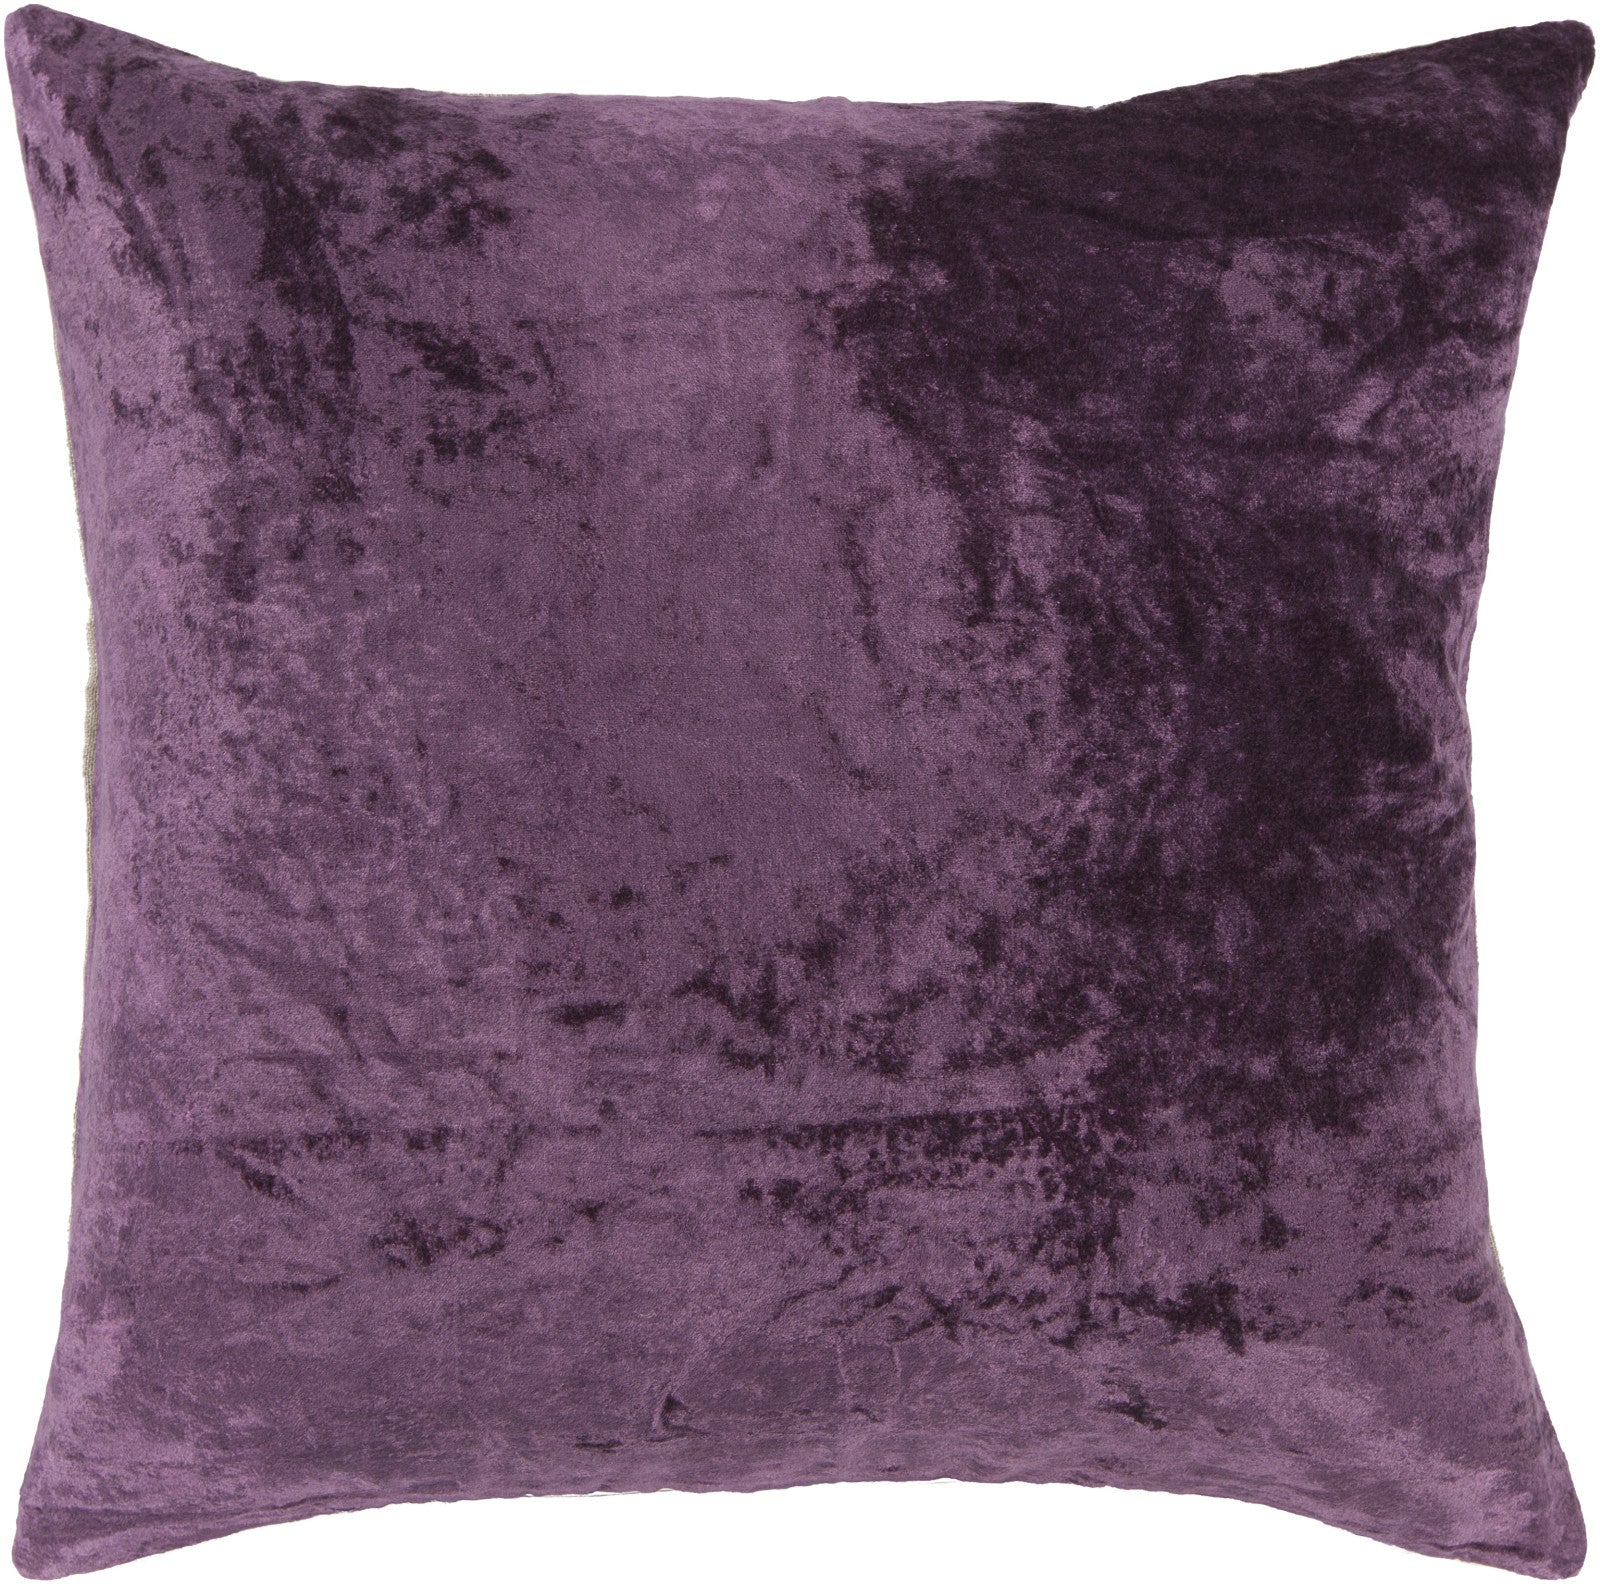 Chandra Pillows CUS-28047 Purple main image